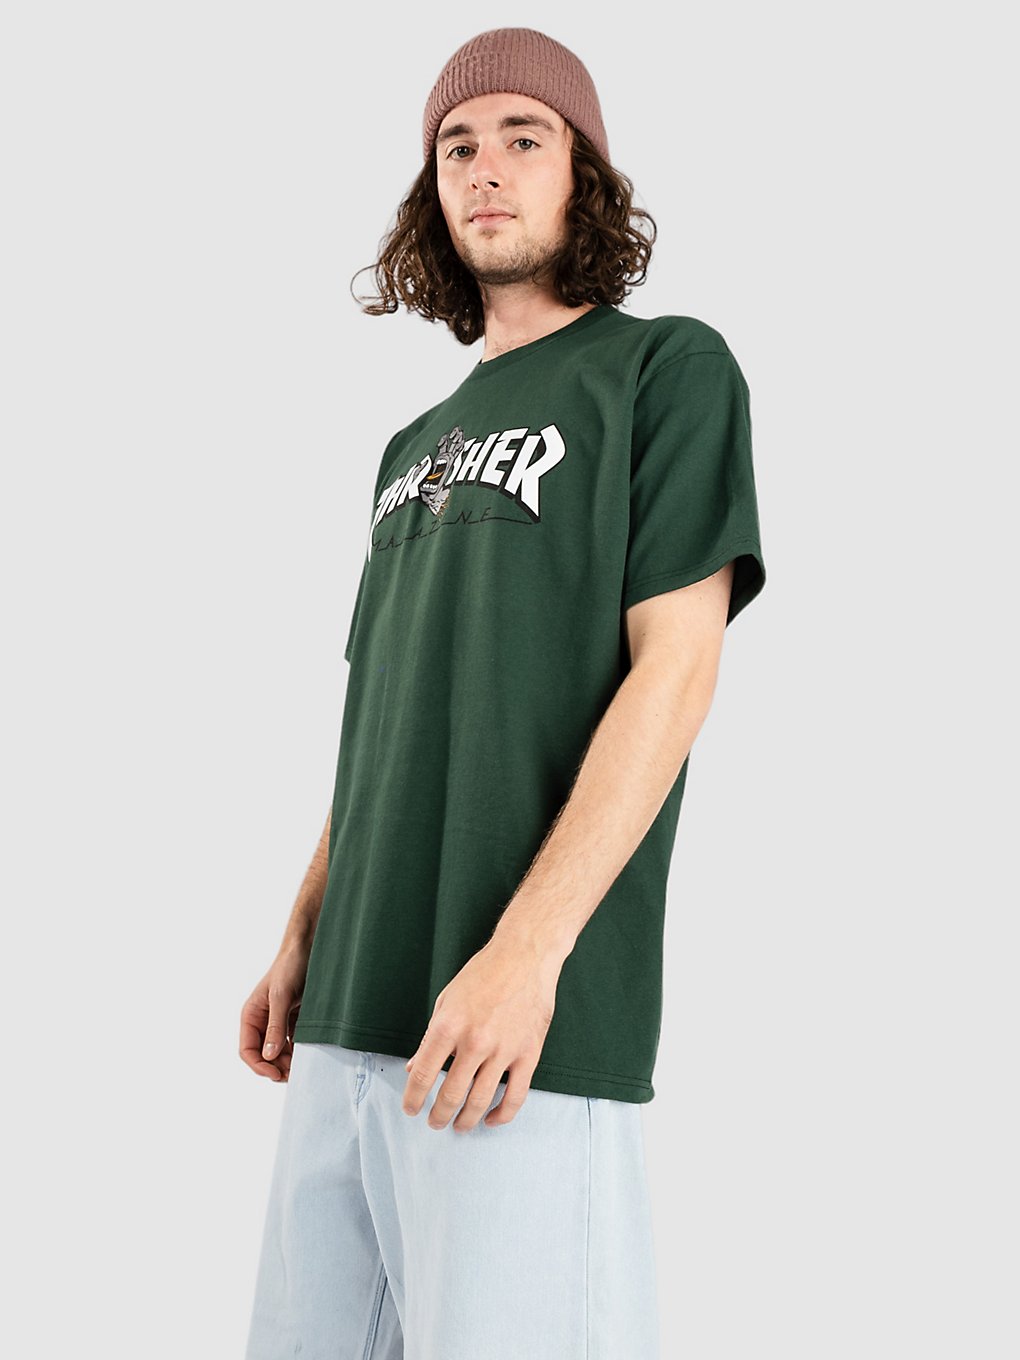 Santa Cruz X Thrasher Screaming Logo T-Shirt forest green kaufen